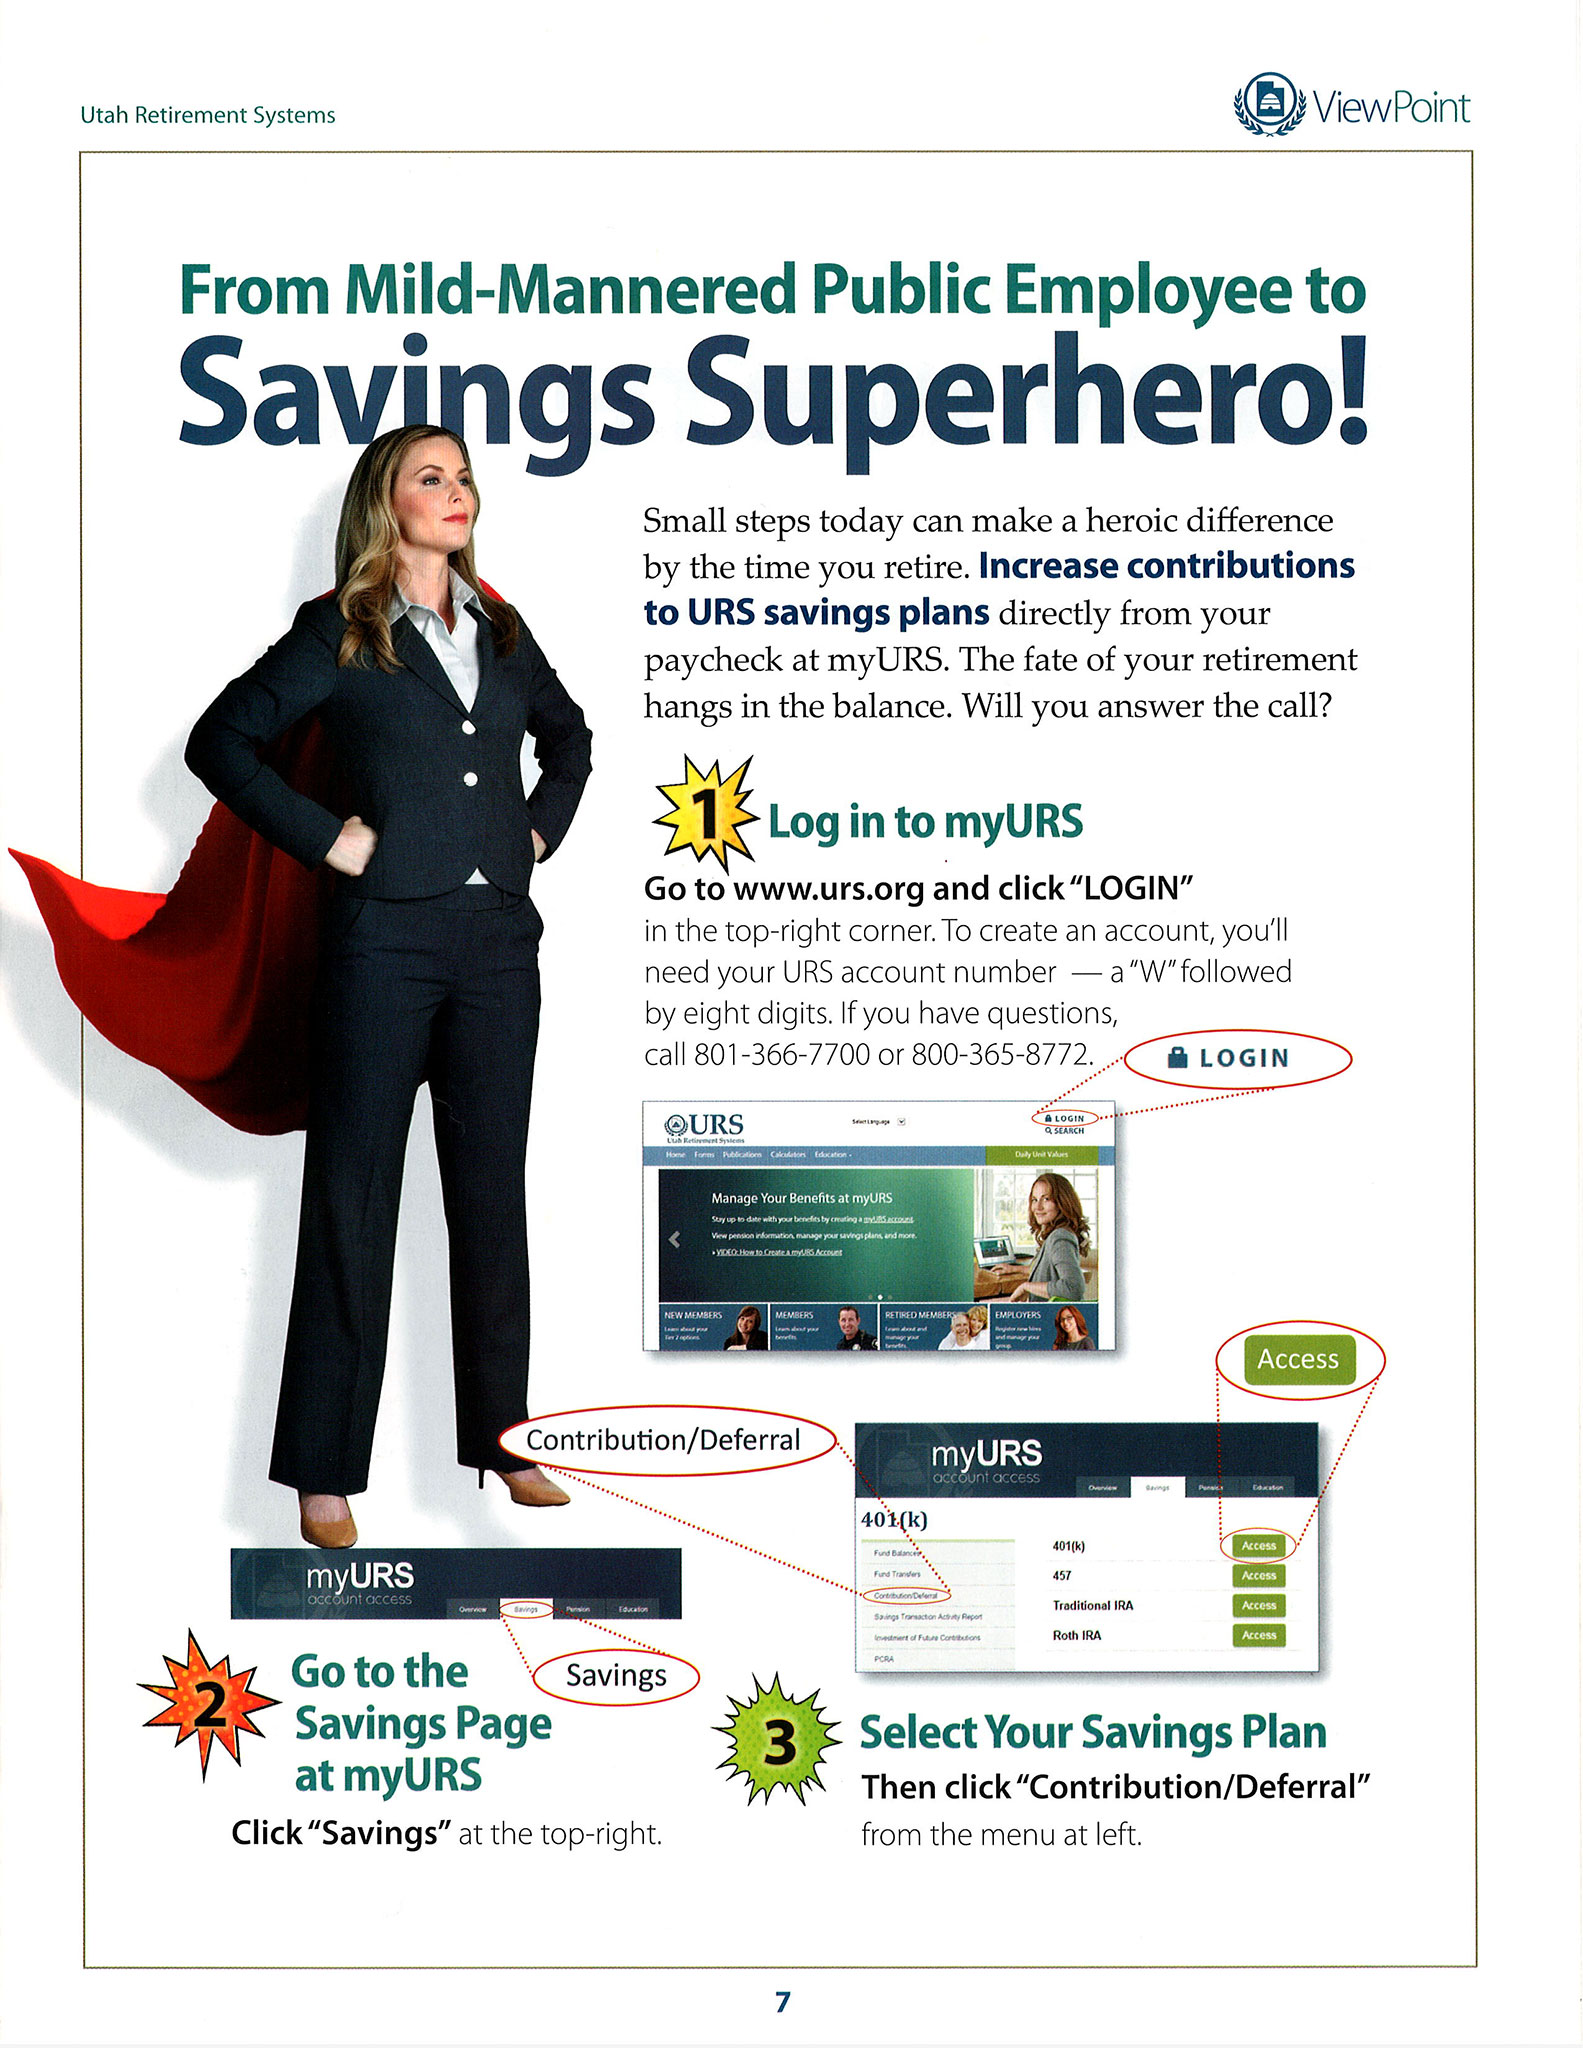 From Mild-Mannered Public Employee to Savings Superhero!